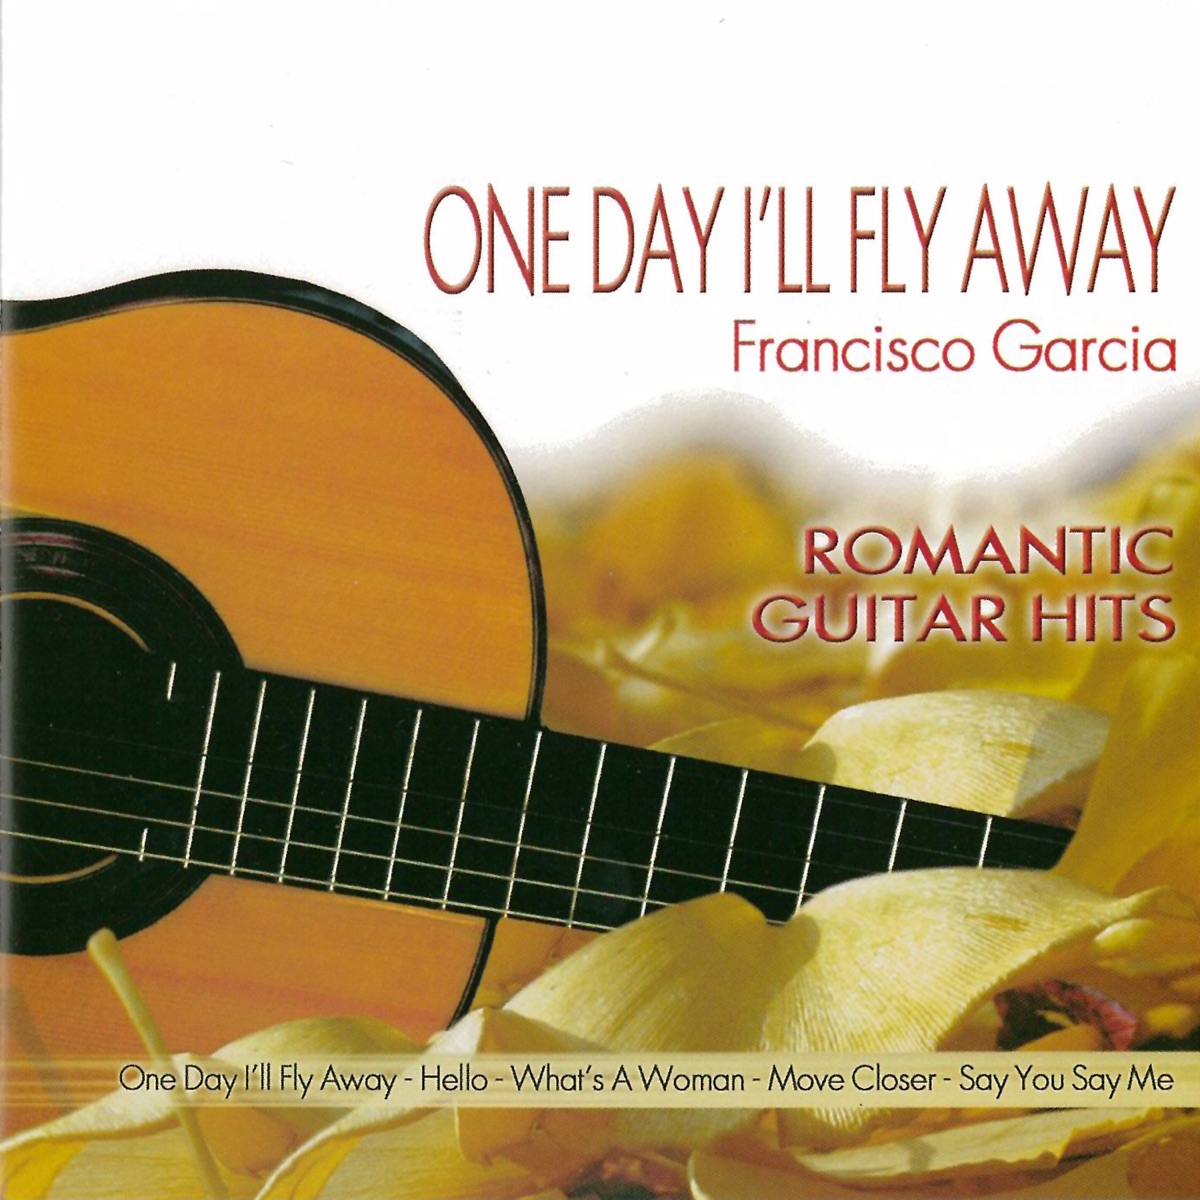 Romantic Guitar Hits - Blue Eyes by Francisco Garcia on Apple Music